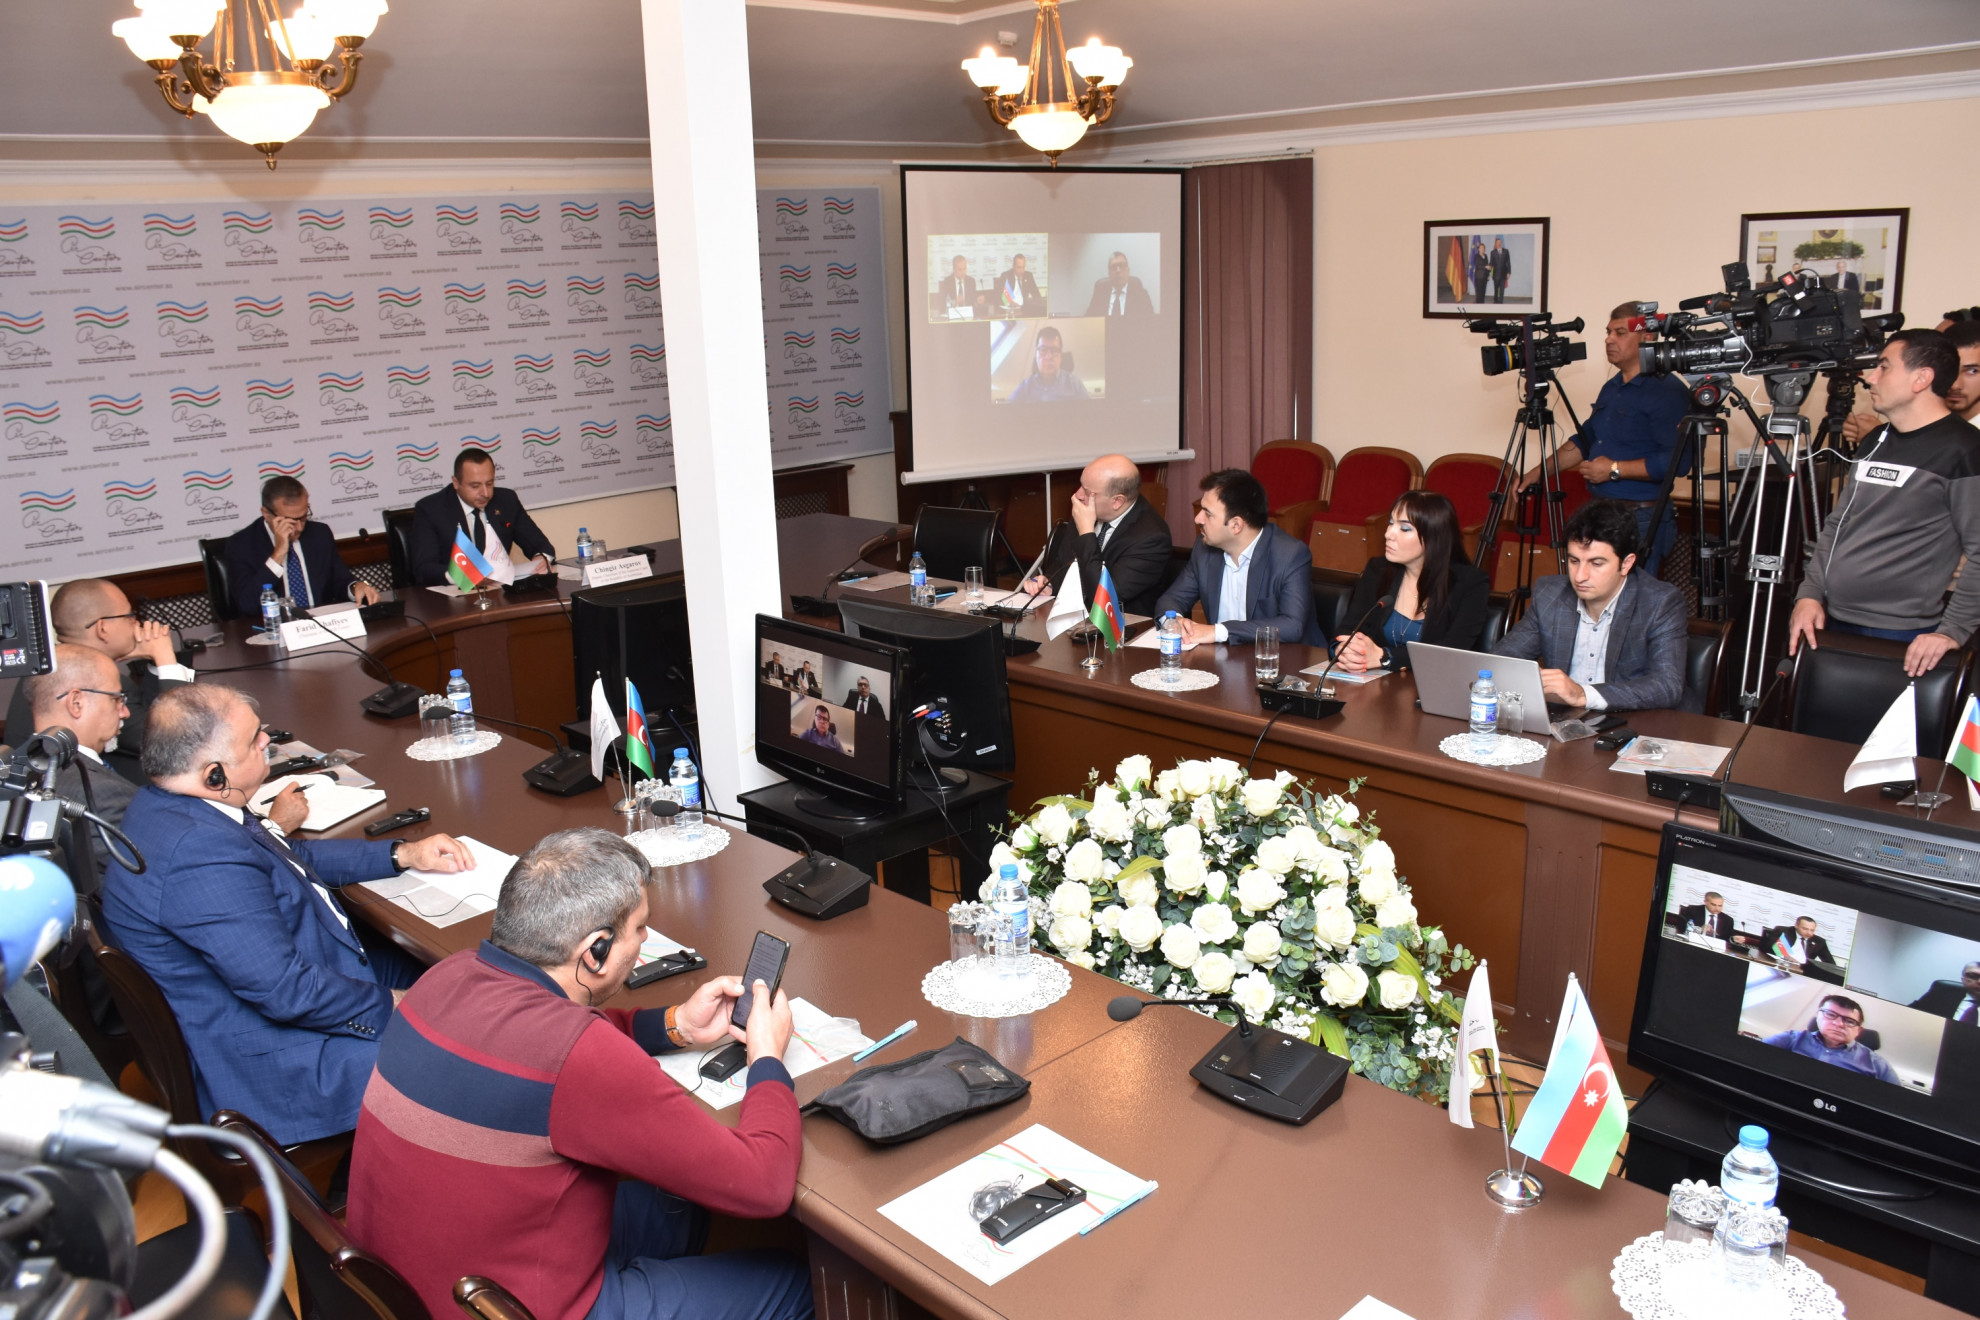 A hybrid seminar on “Addressing the War Crimes against Azerbaijan” was held at the AIR Center